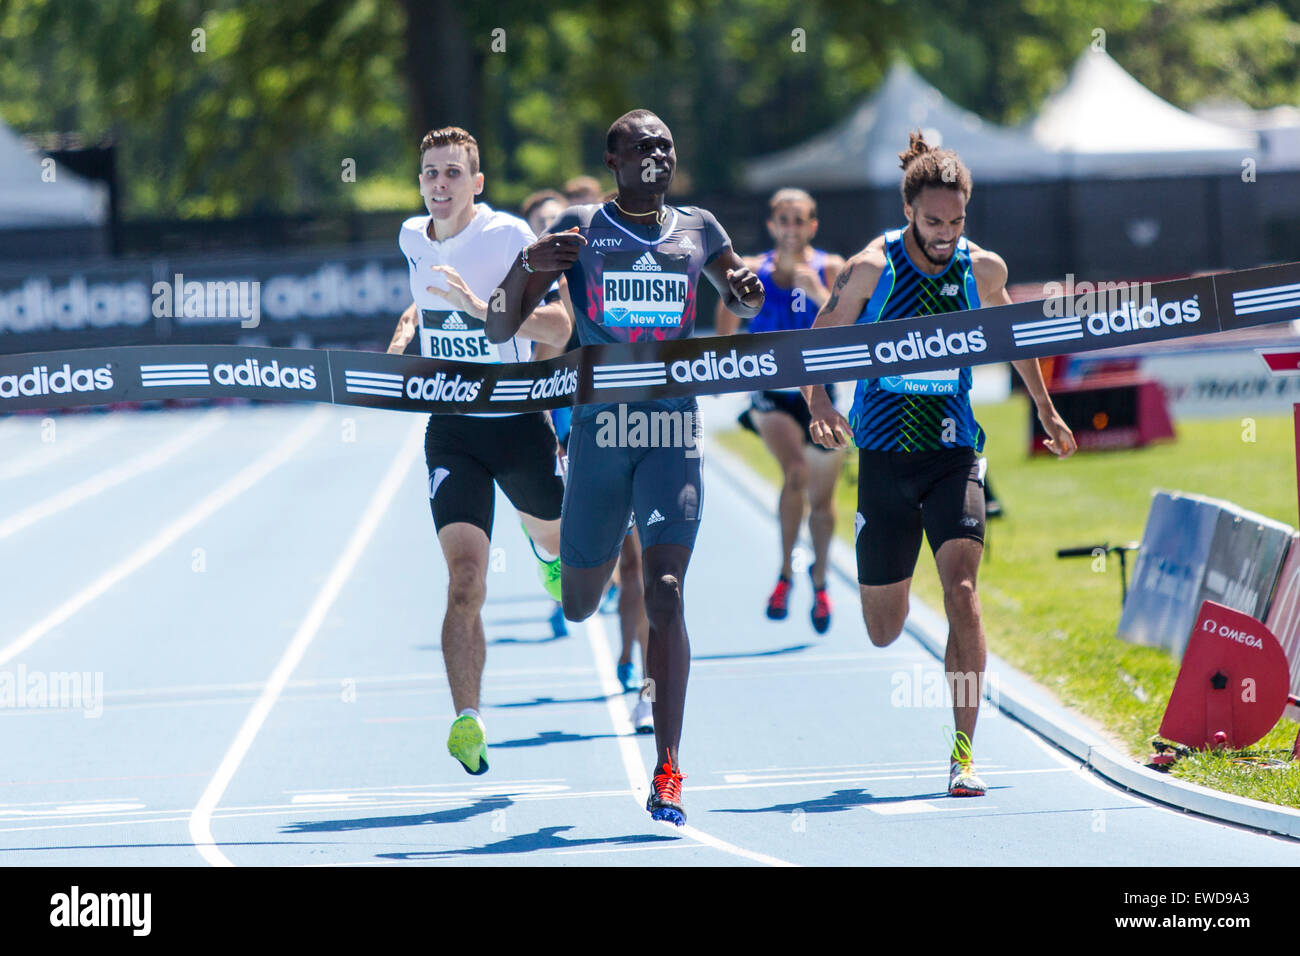 David Rudisha (KEN) winning the Men's 800m at the 2015 Adidas NYC Stock  Photo - Alamy